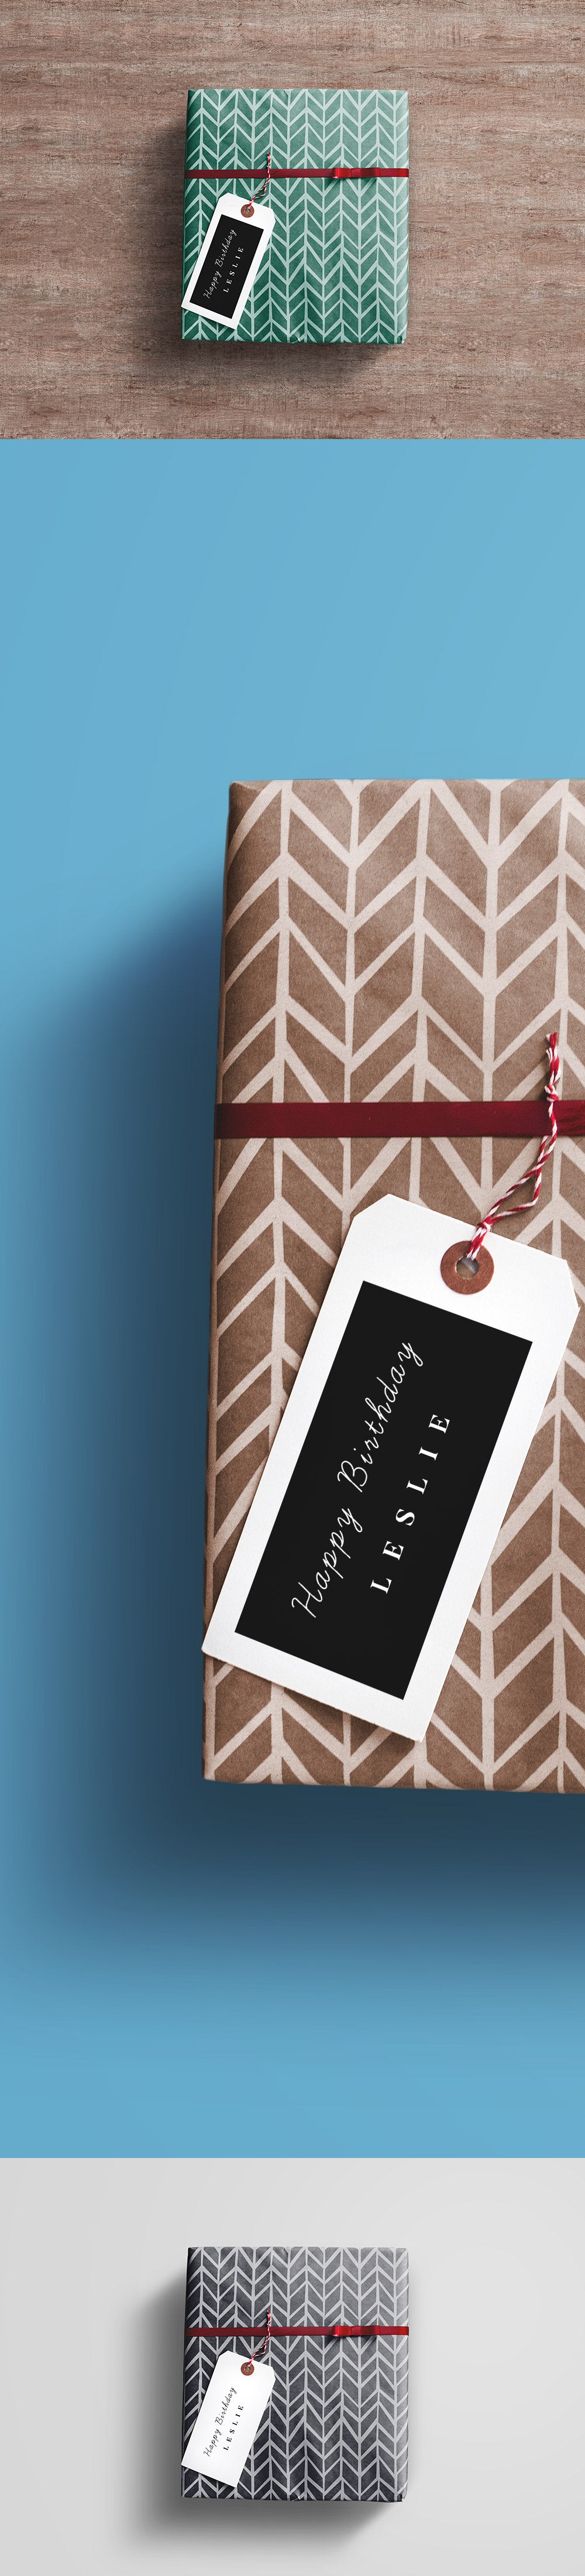 Download Free Gift Wrap Packaging Box Psd Mockup Creativebooster PSD Mockup Templates